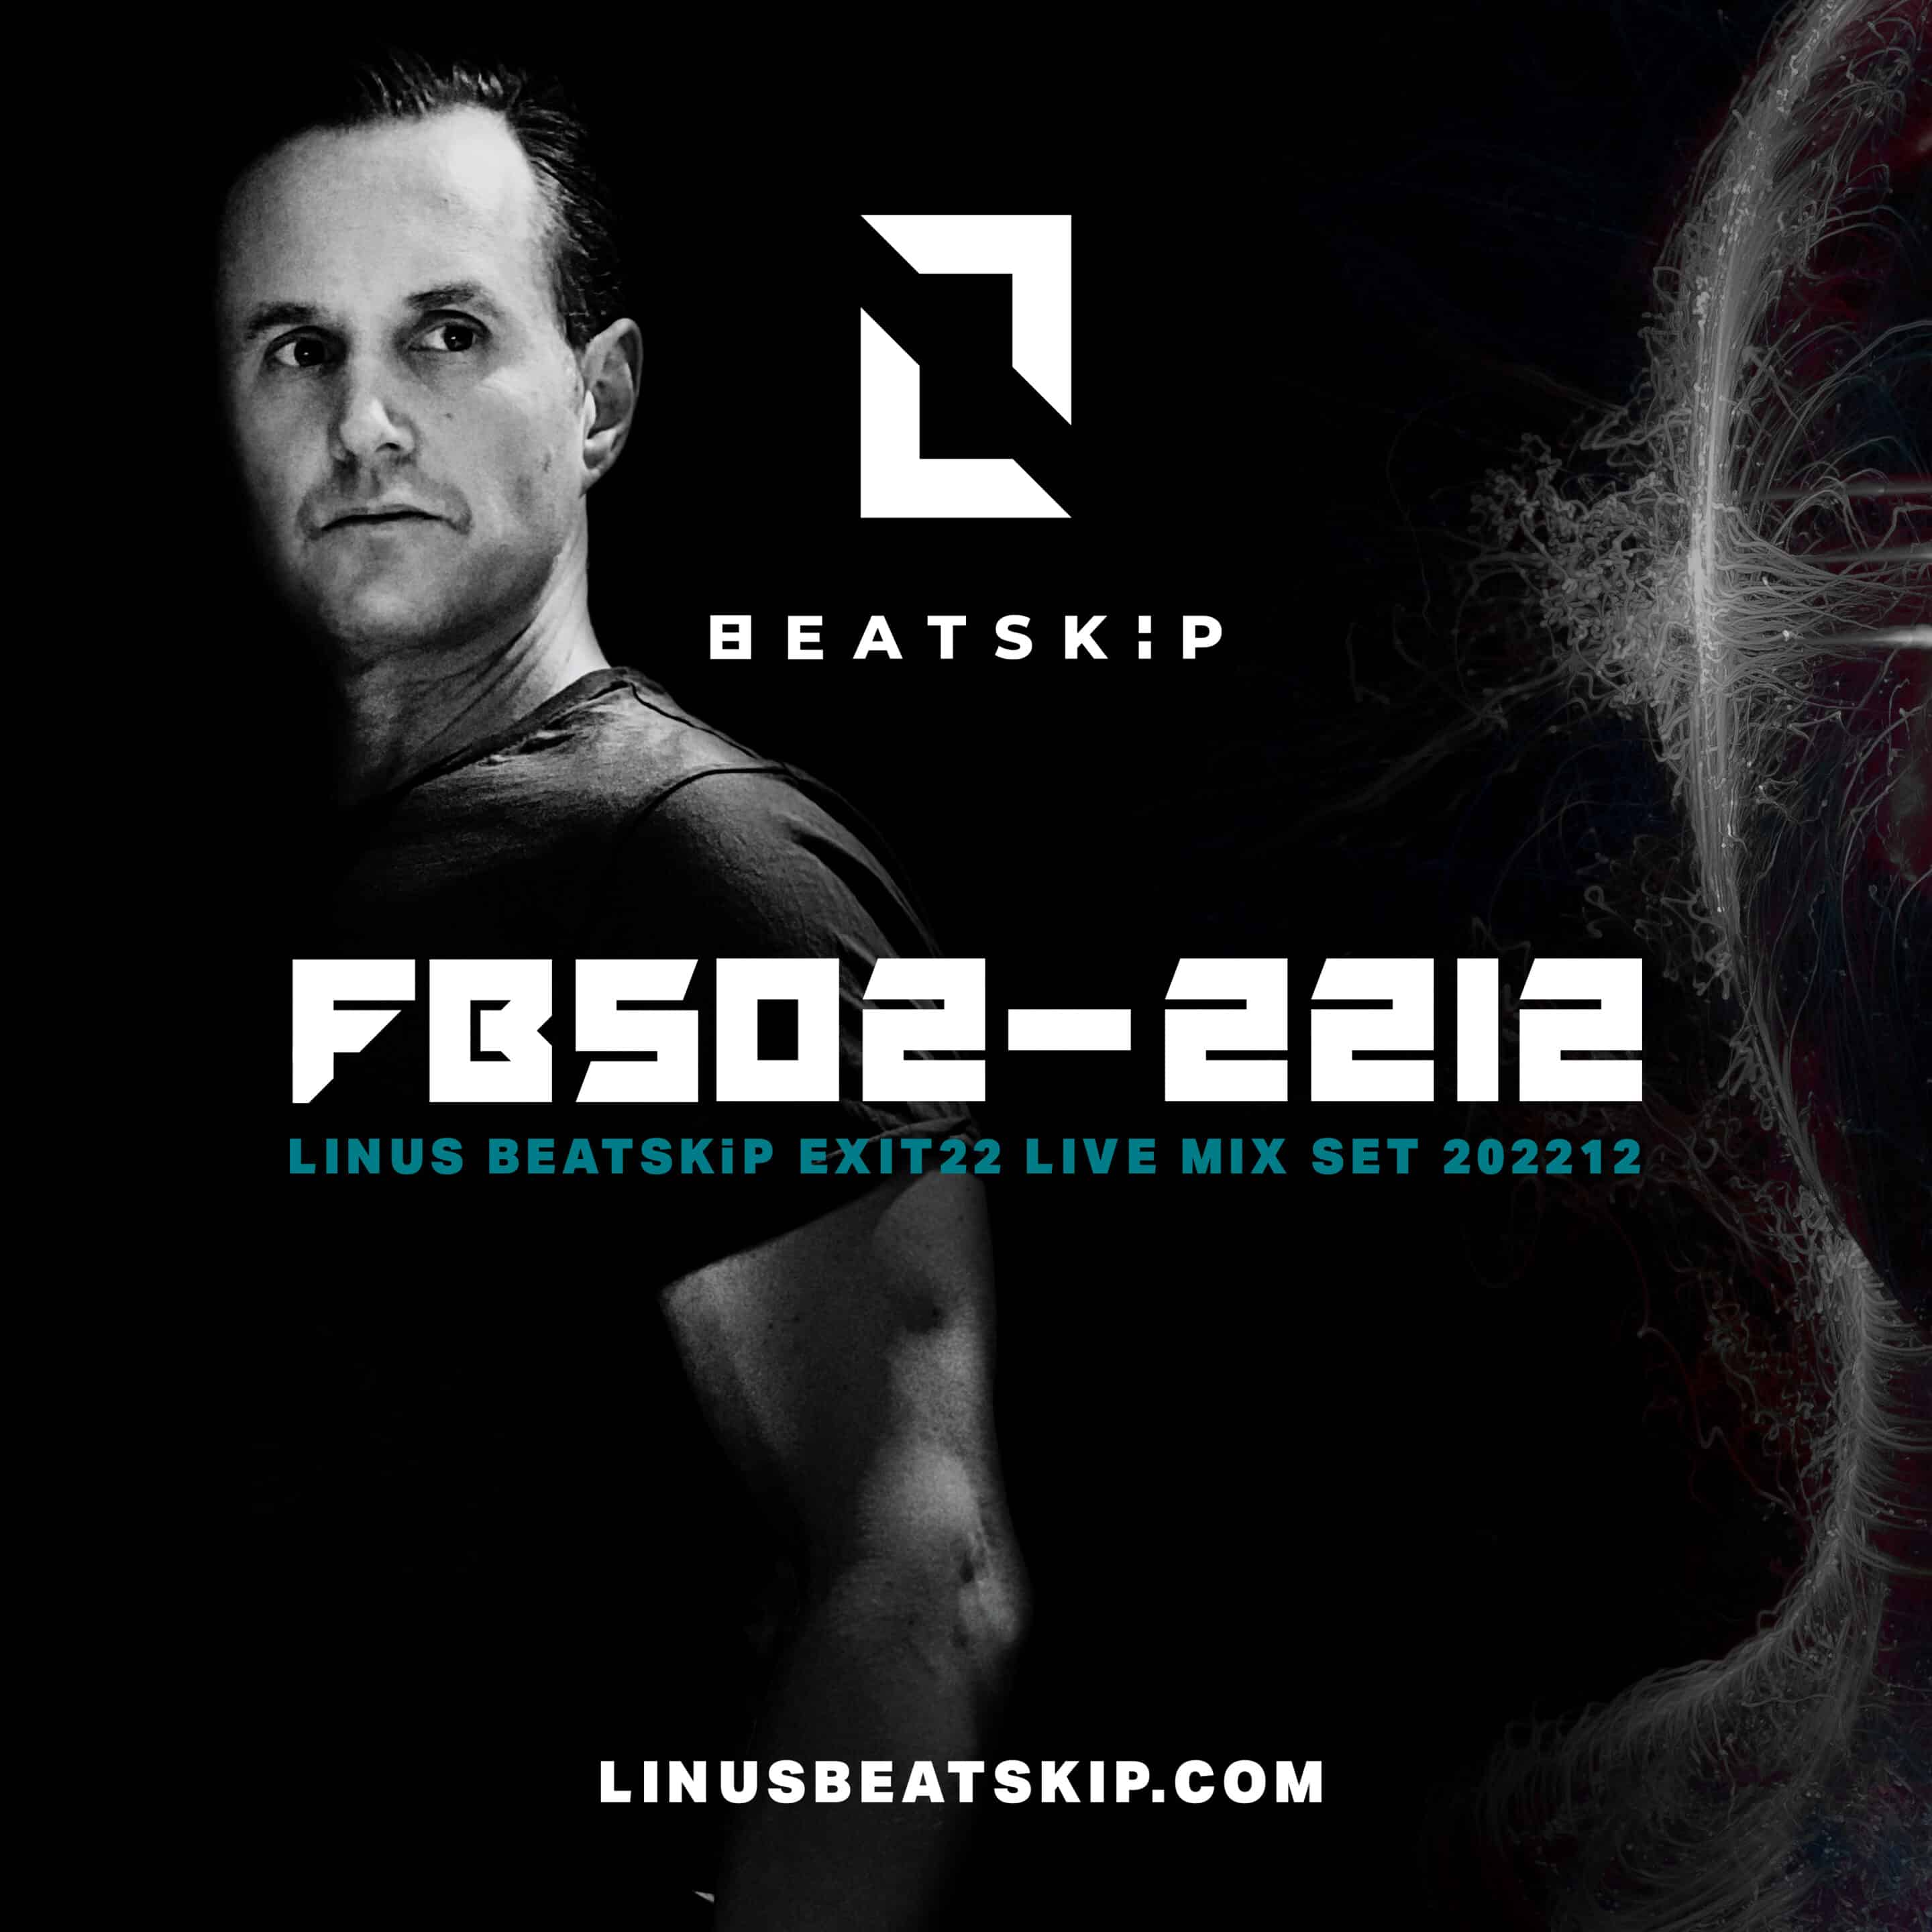 DJ MIX: FBS02-2201 - LINUS BEATSKiP Exit 22 live mix